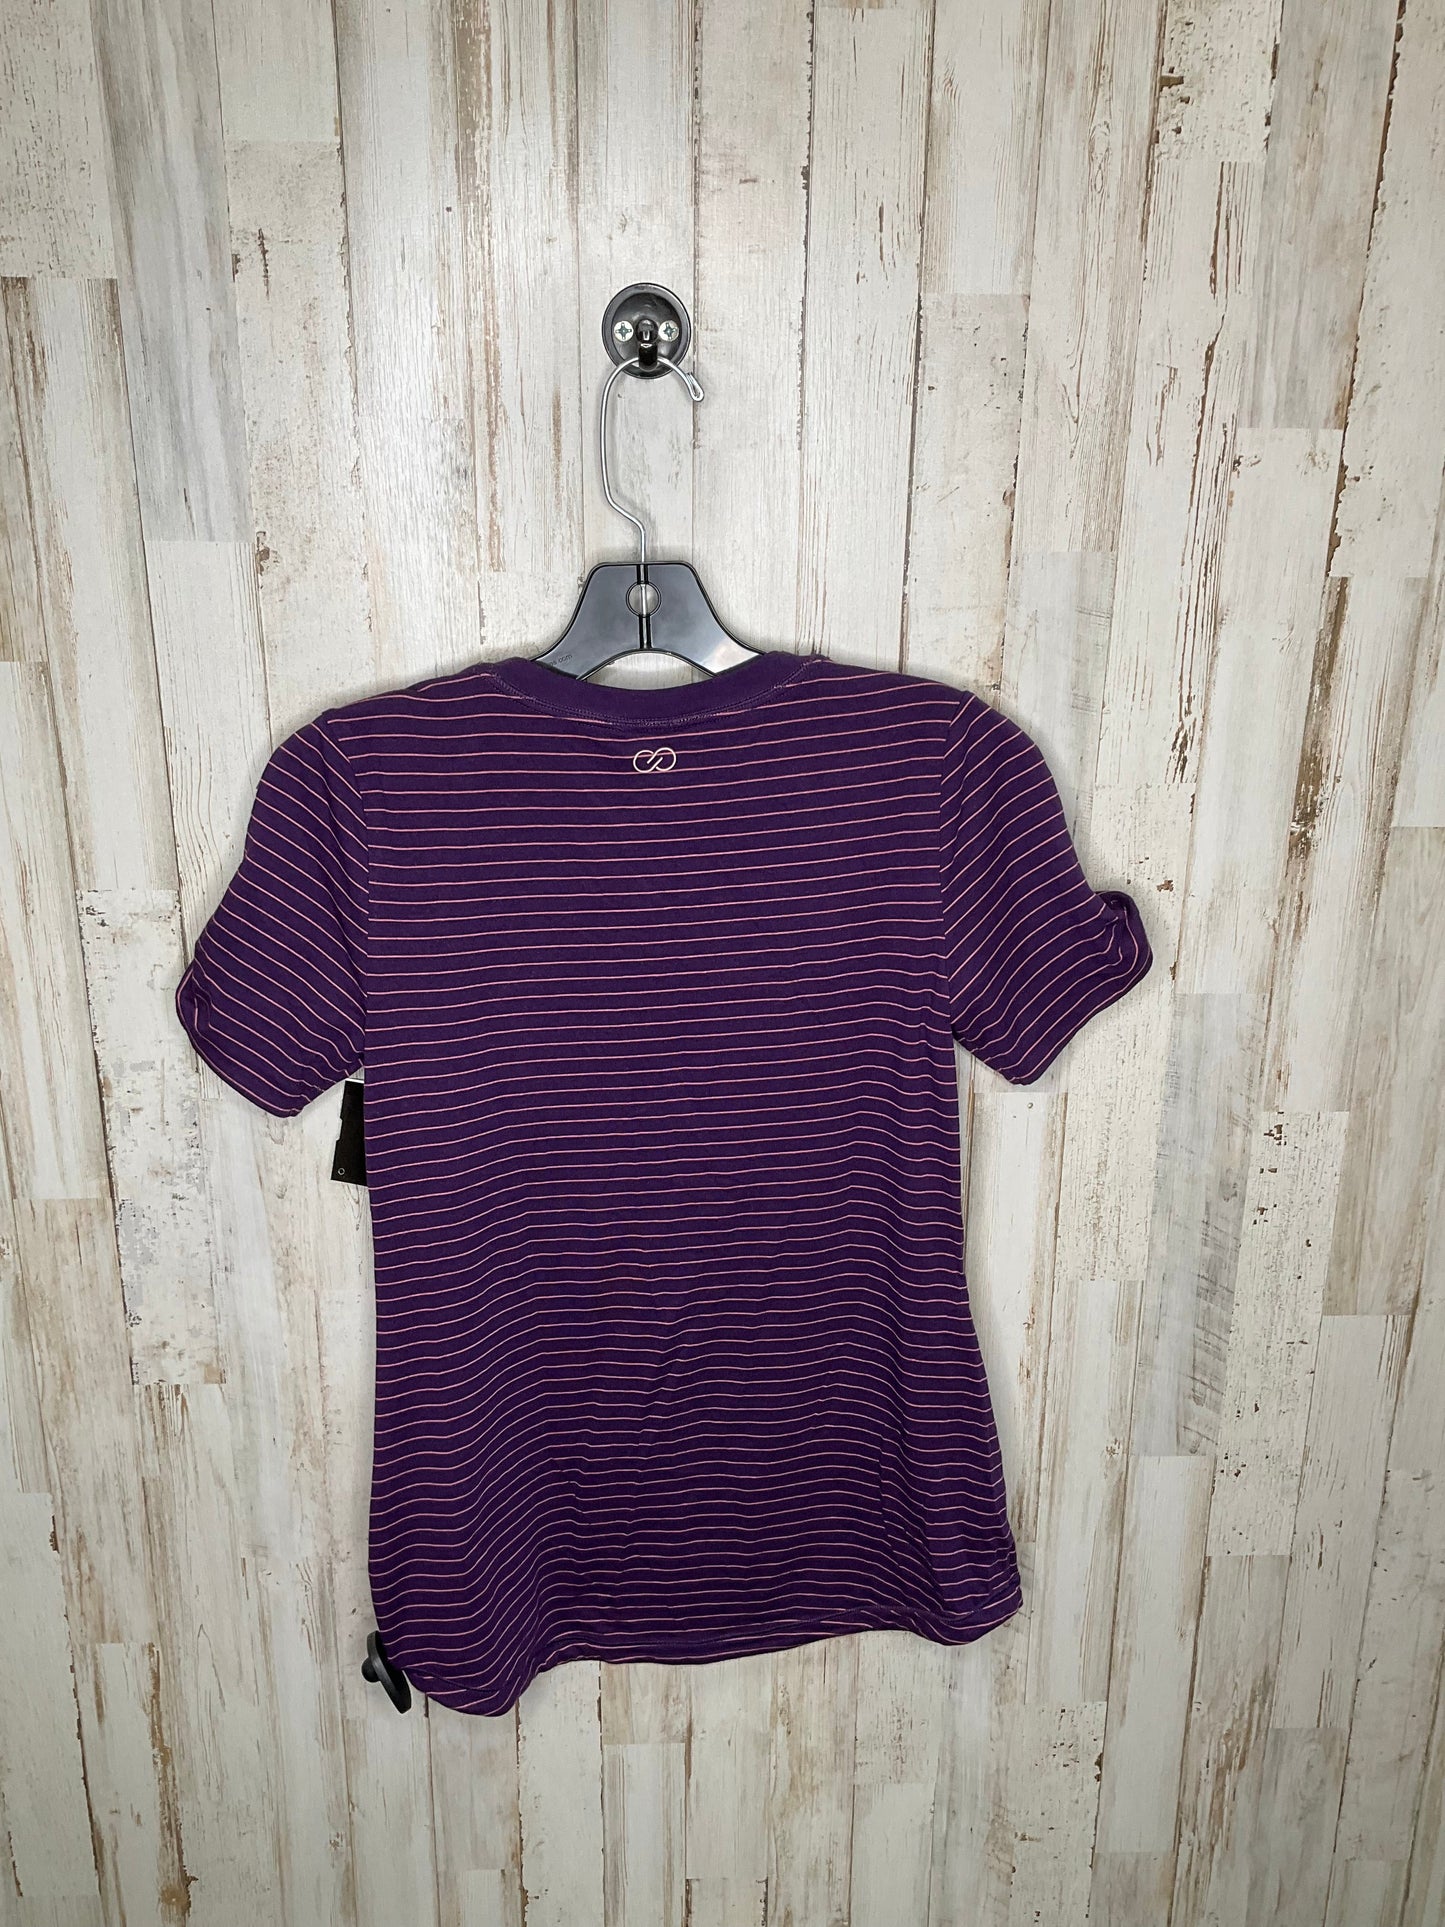 Purple Athletic Top Short Sleeve Calia, Size S